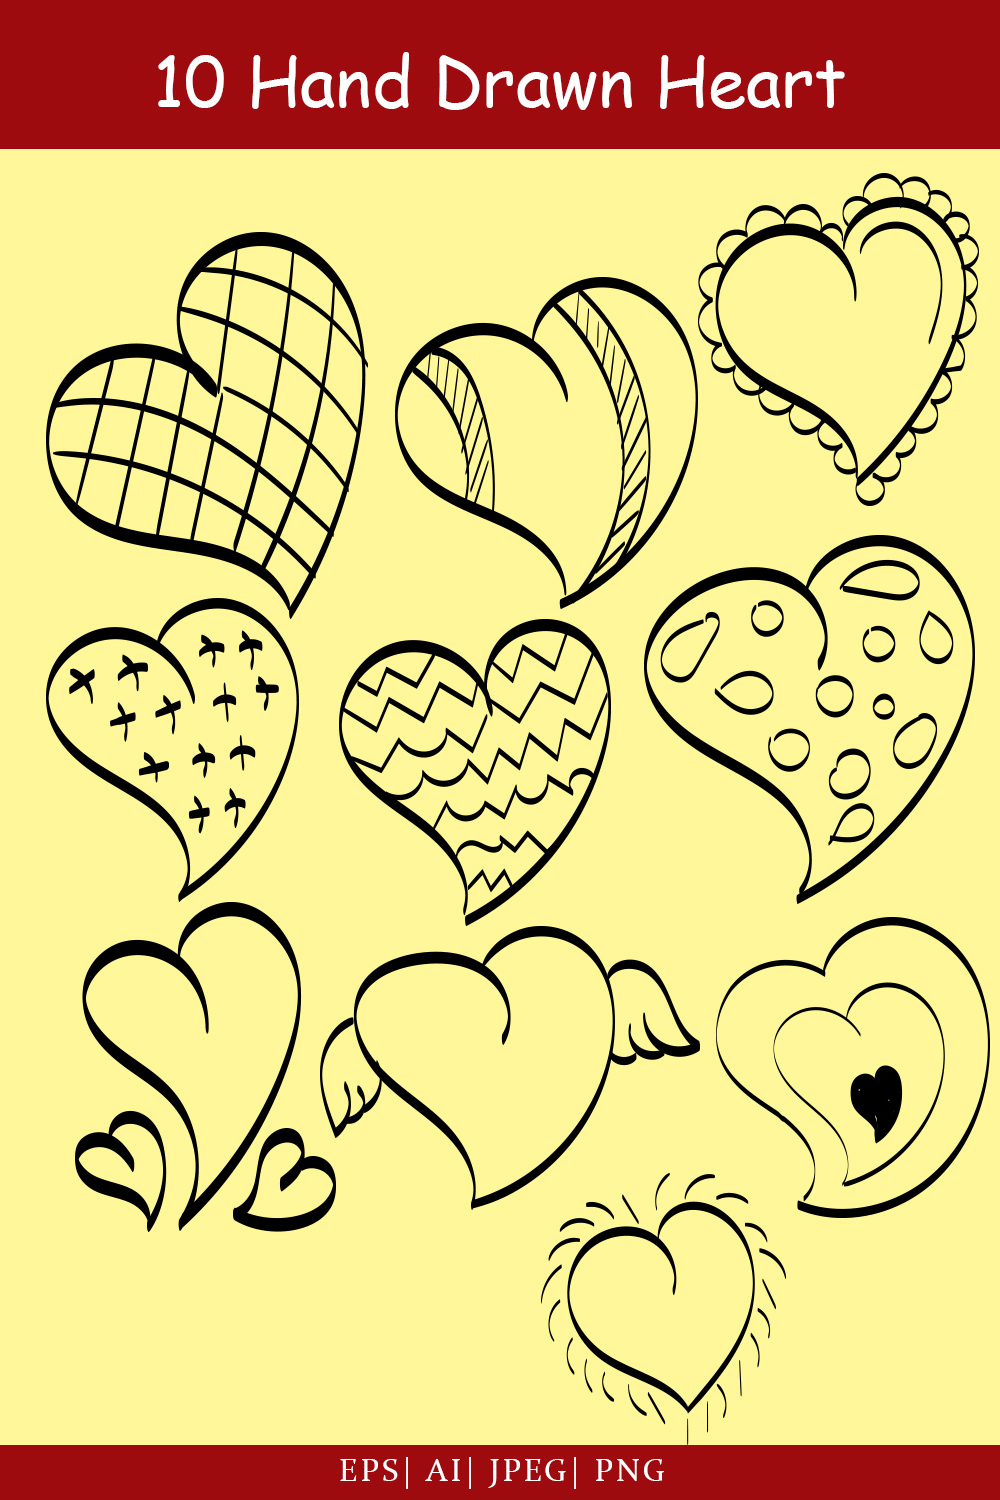 Hand Drawn Heart Graphics pinterest image.